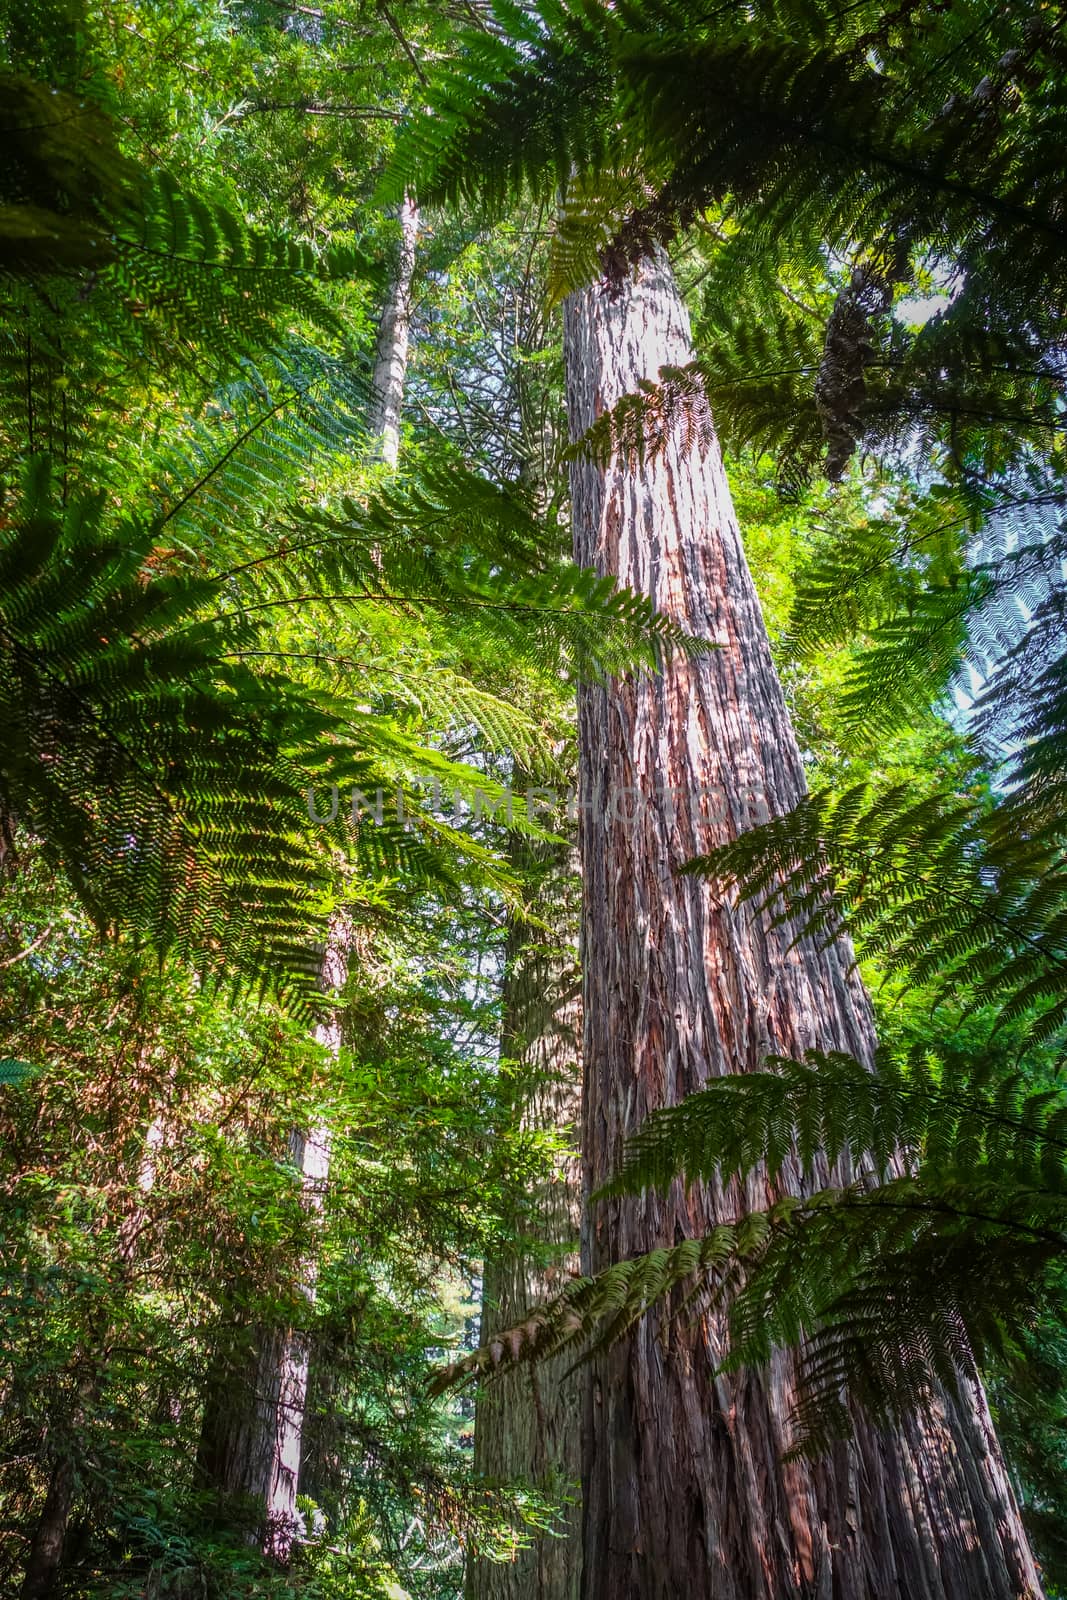 Giant Sequoia and ferns in Whakarewarewa redwood forest, Rotorua, New Zealand